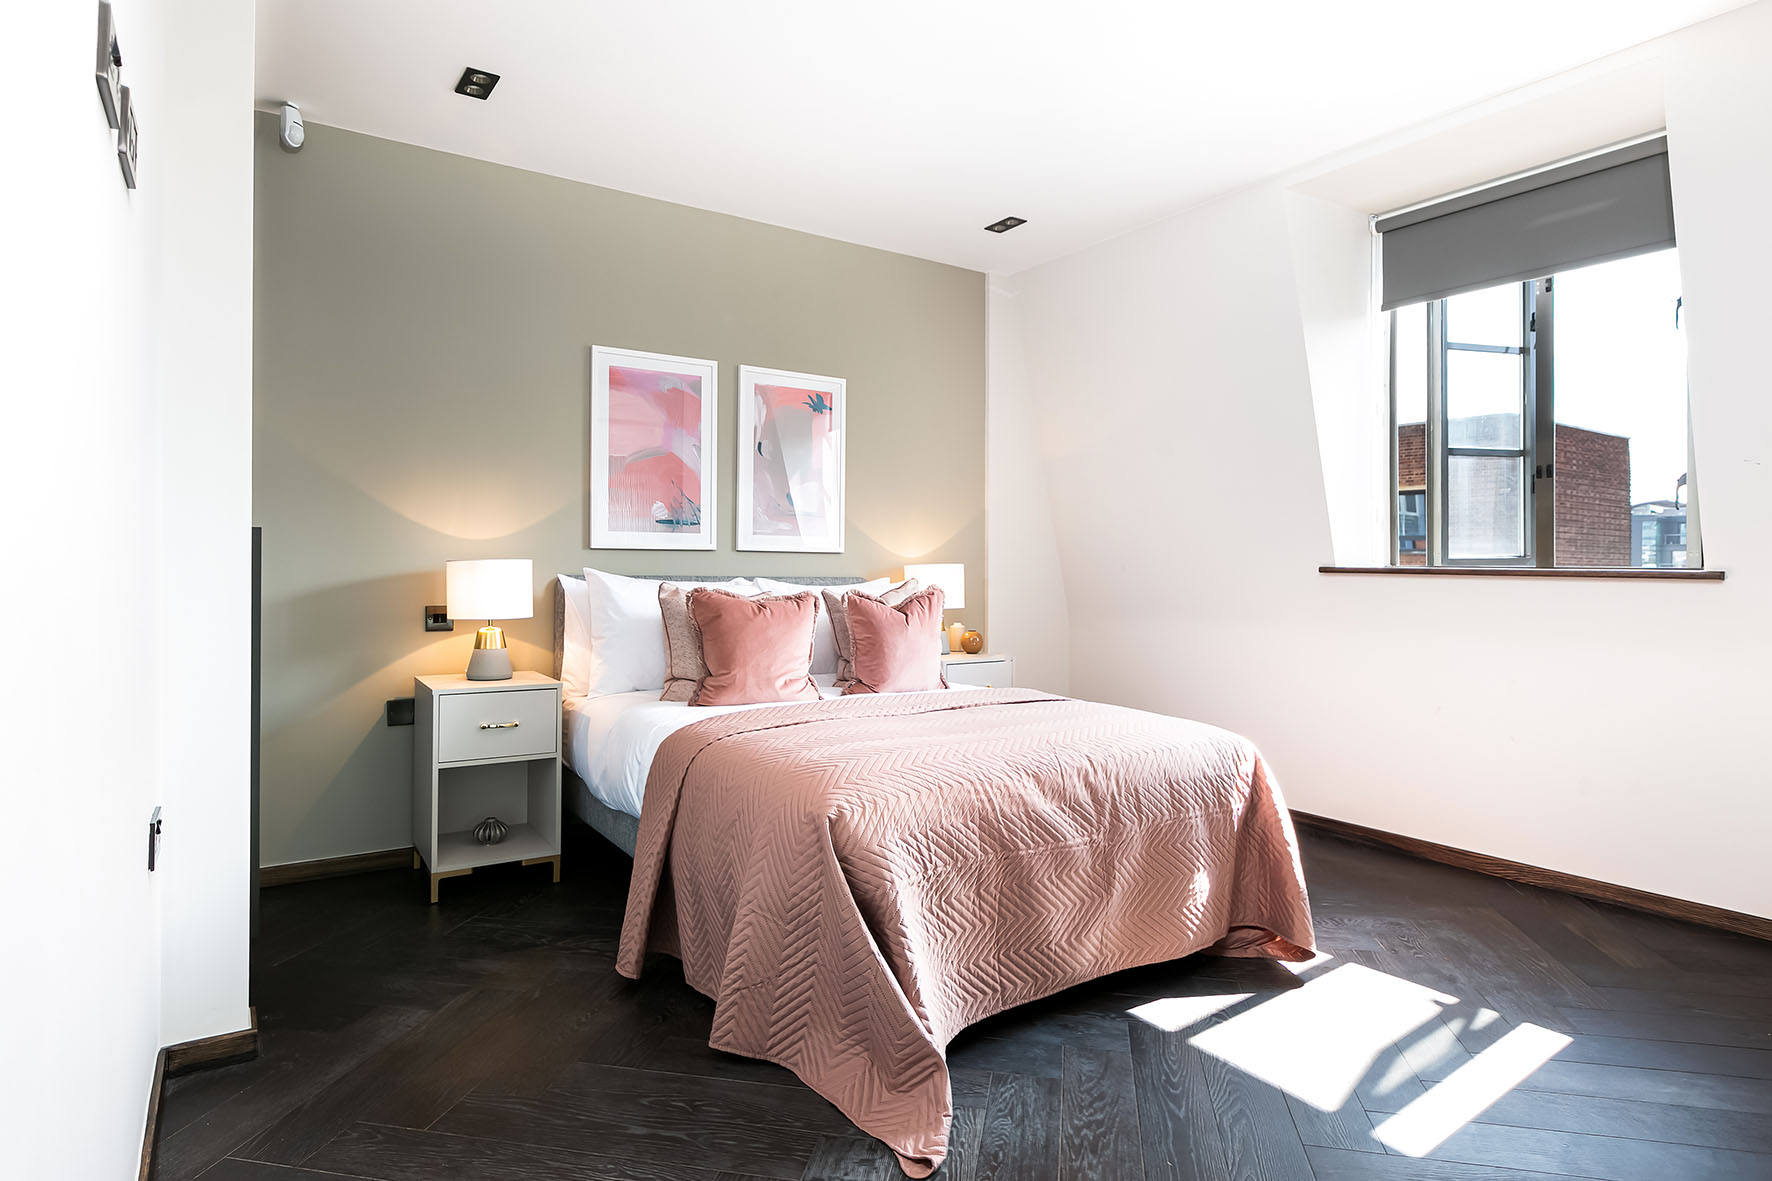 Lovelydays luxury service apartment rental - Soho - Great Marlborough St VIII - Lovelysuite - 3 bedrooms - 3 bathrooms - Queen bed - 5 star serviced apartments in london - b1a76f739b86 - Lovelydays